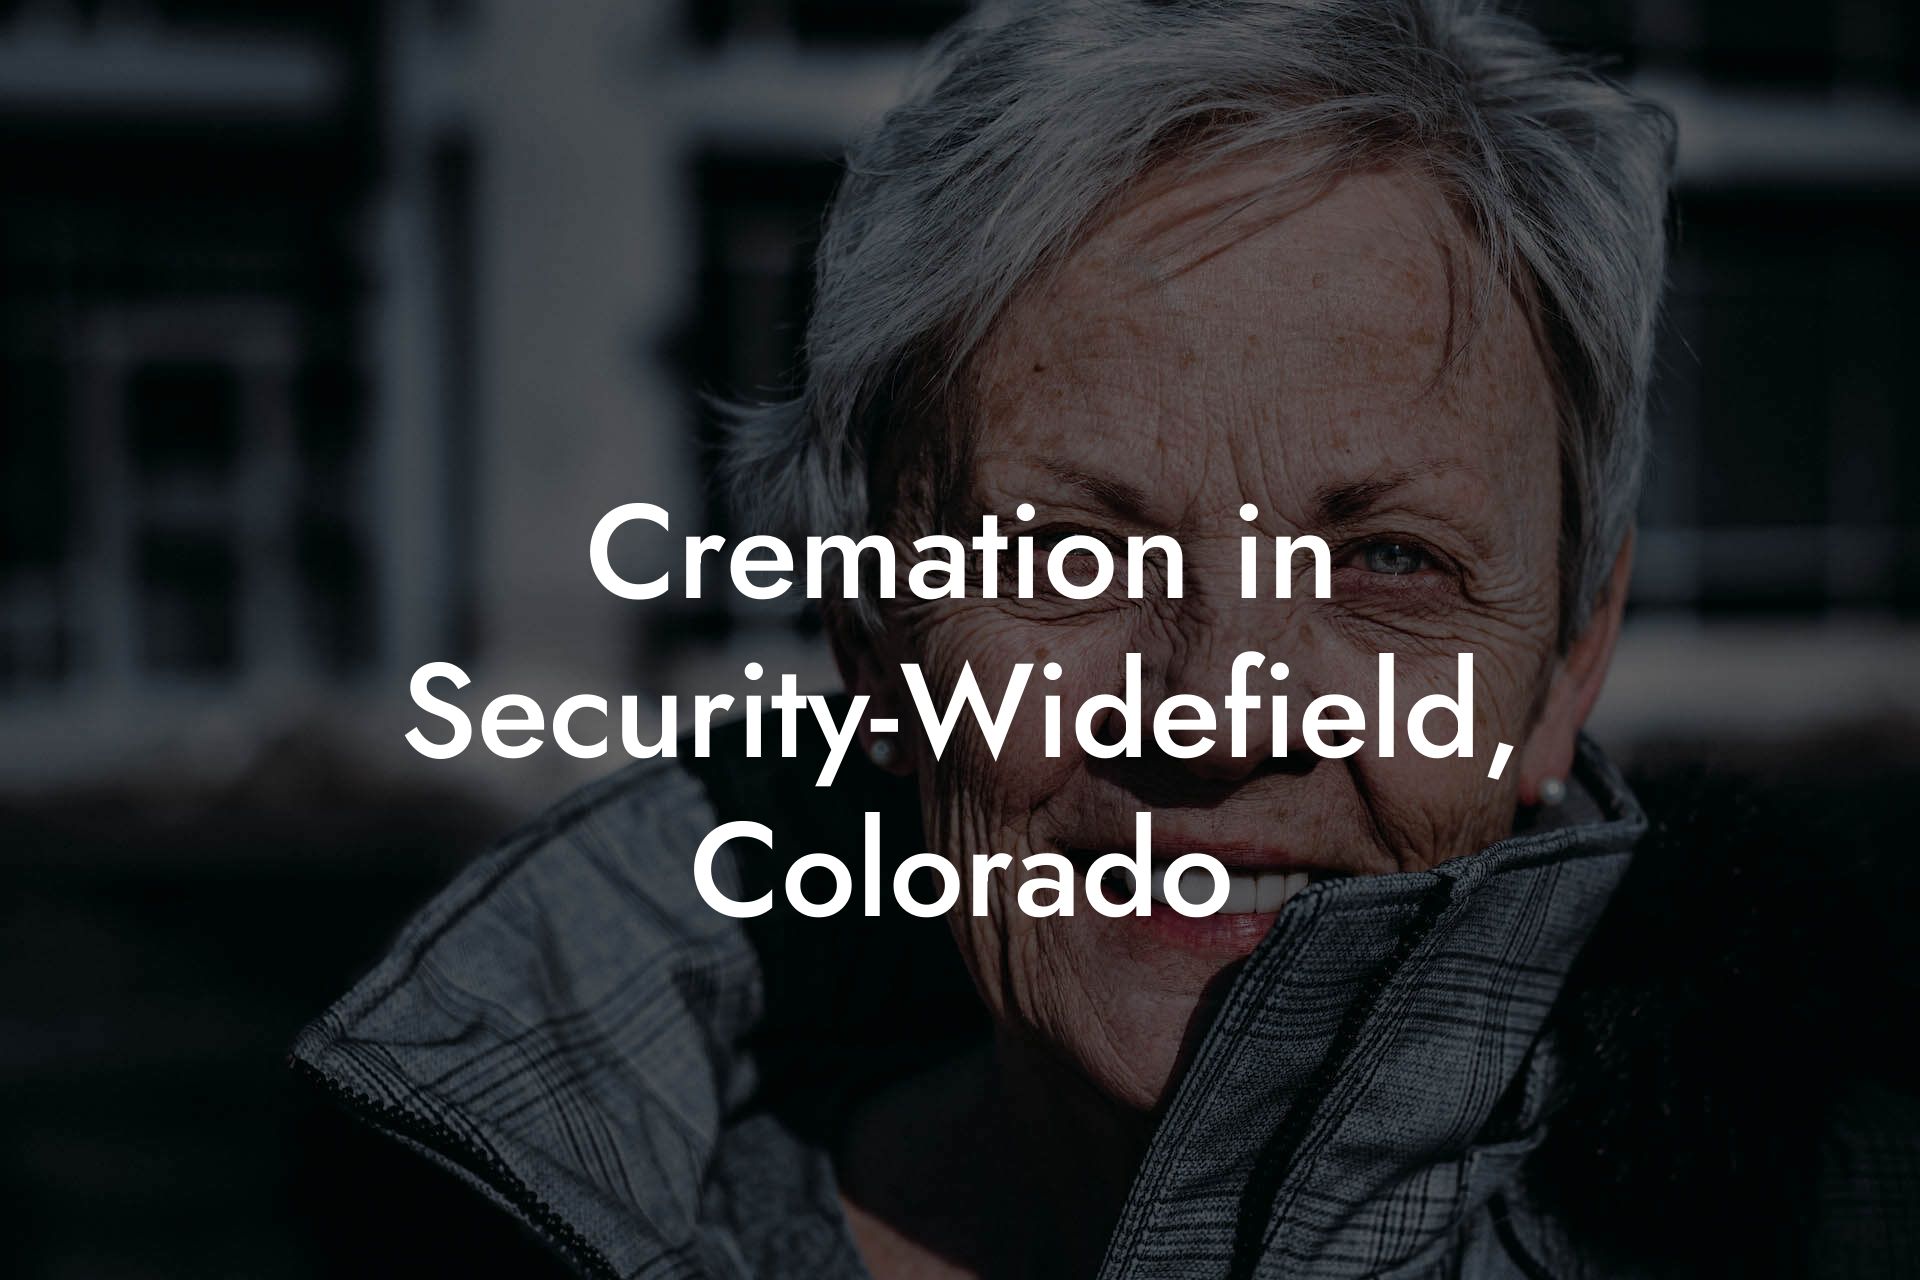 Cremation in Security-Widefield, Colorado